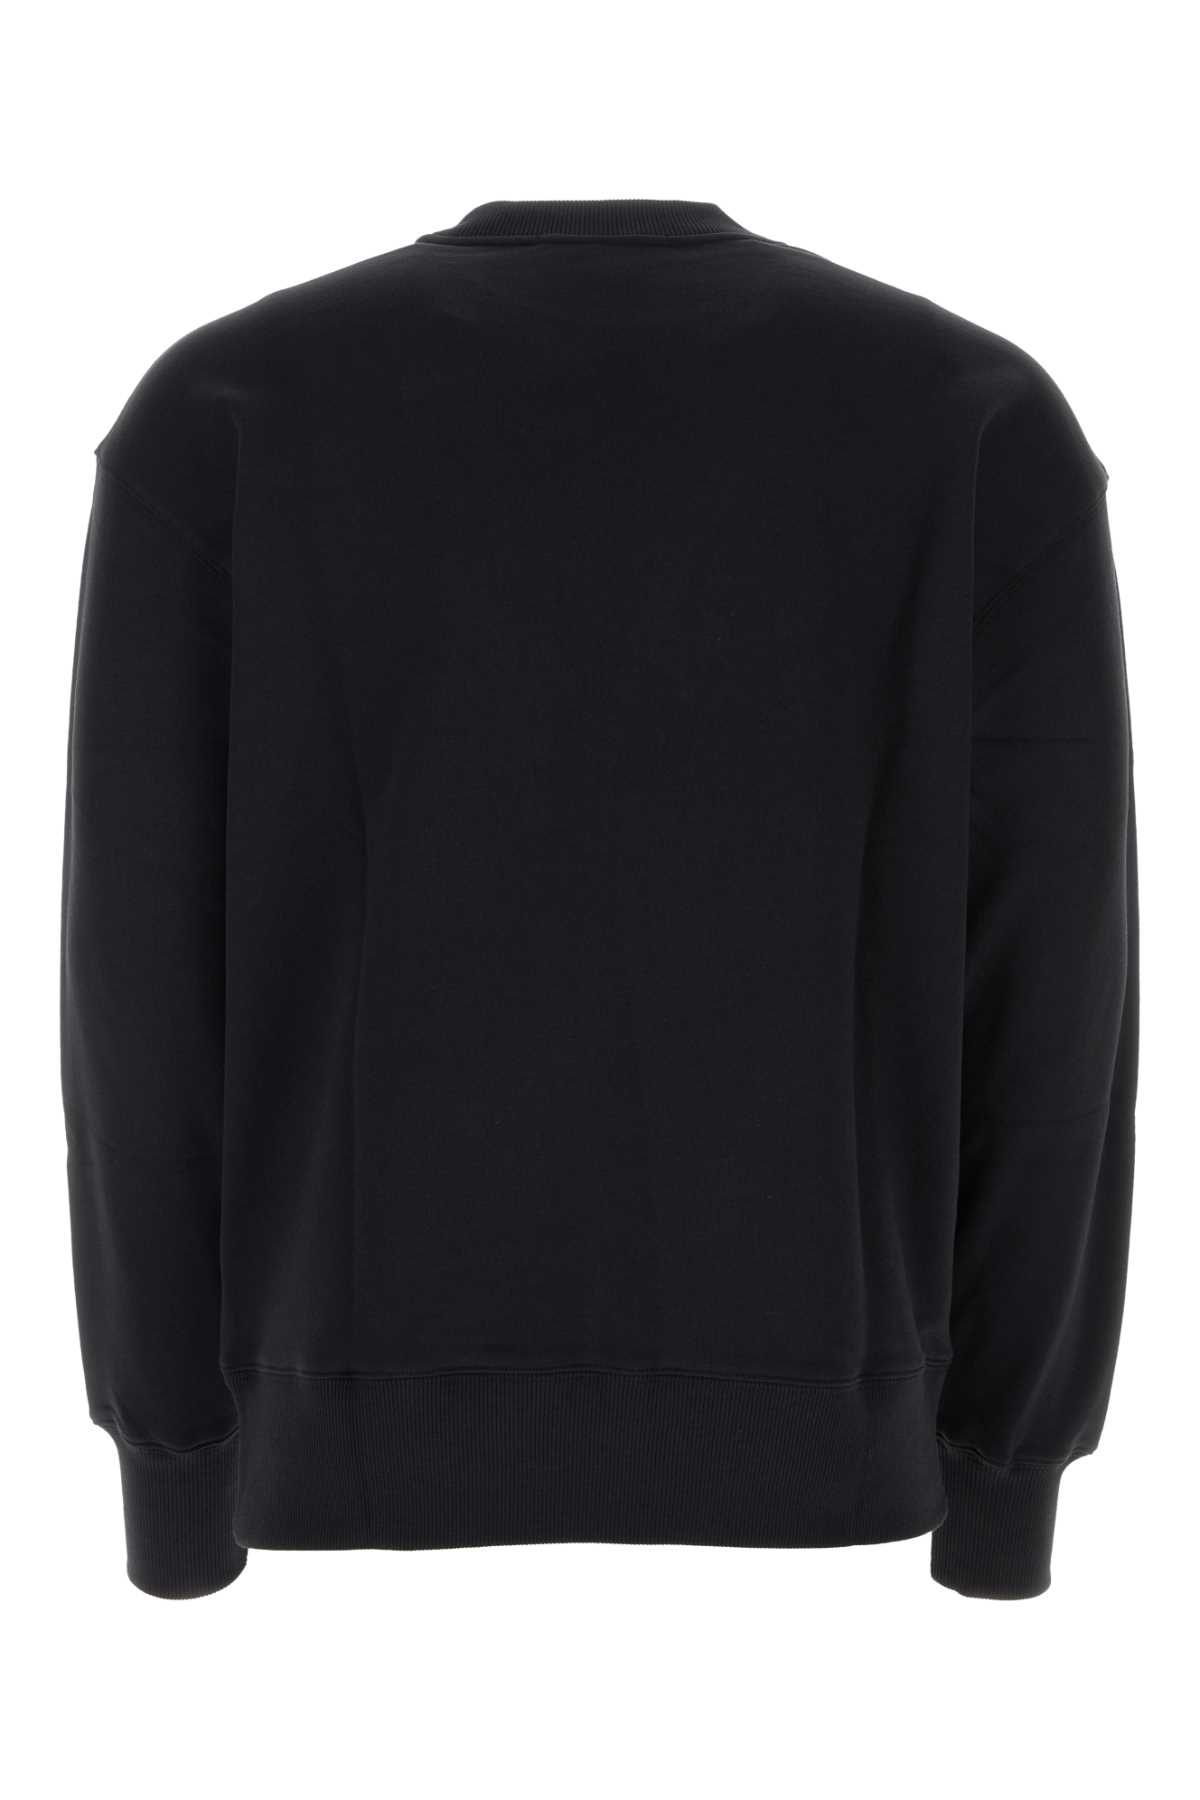 Msgm Black Cotton Sweatshirt In Black99